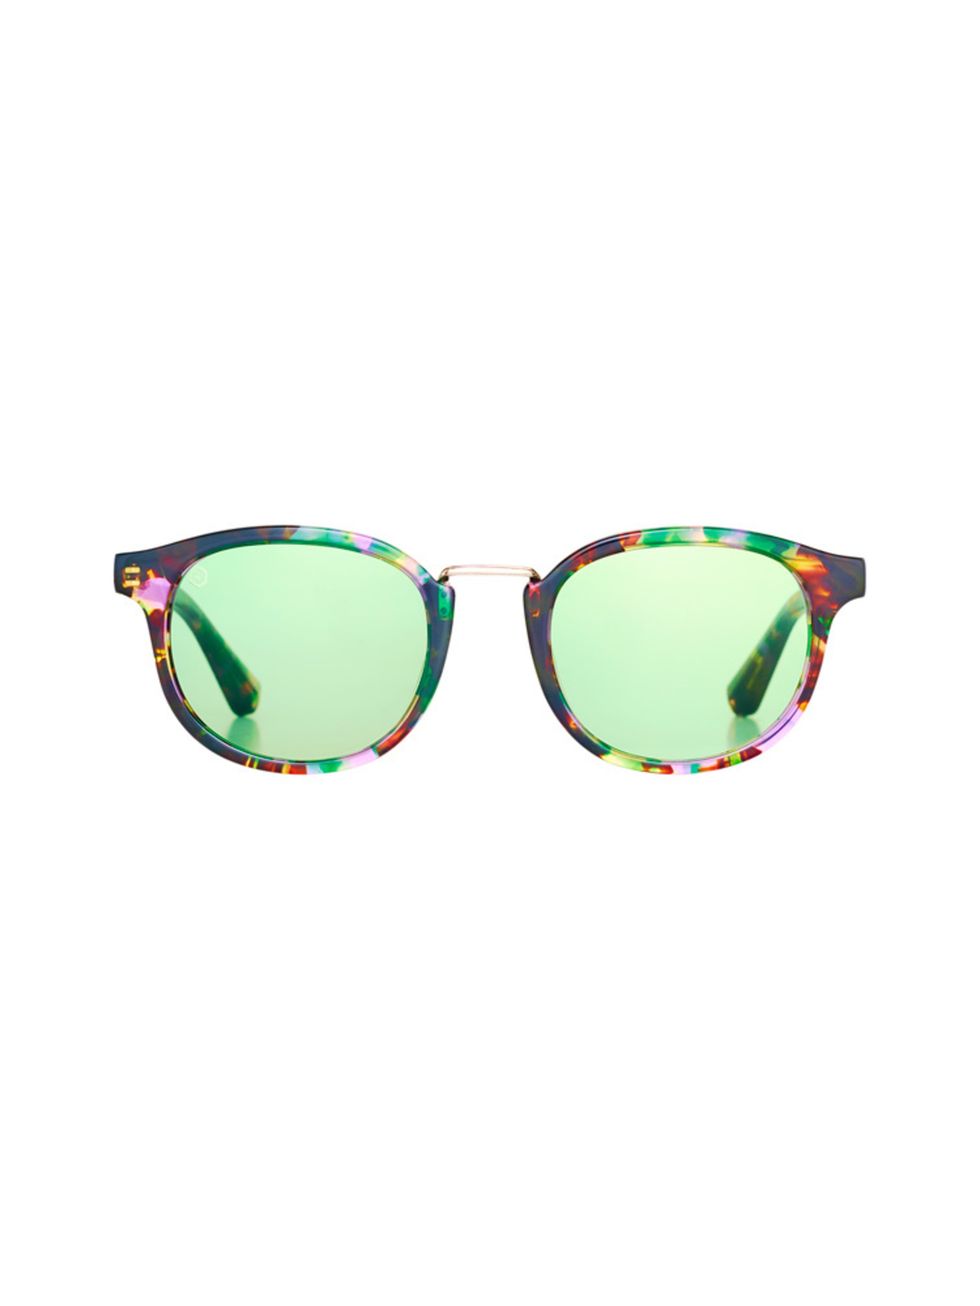 <p><a href="http://taylormorriseyewear.com/shop/vredefort-green" target="_blank">Taylor Morris</a> Sunglasses, £150</p>